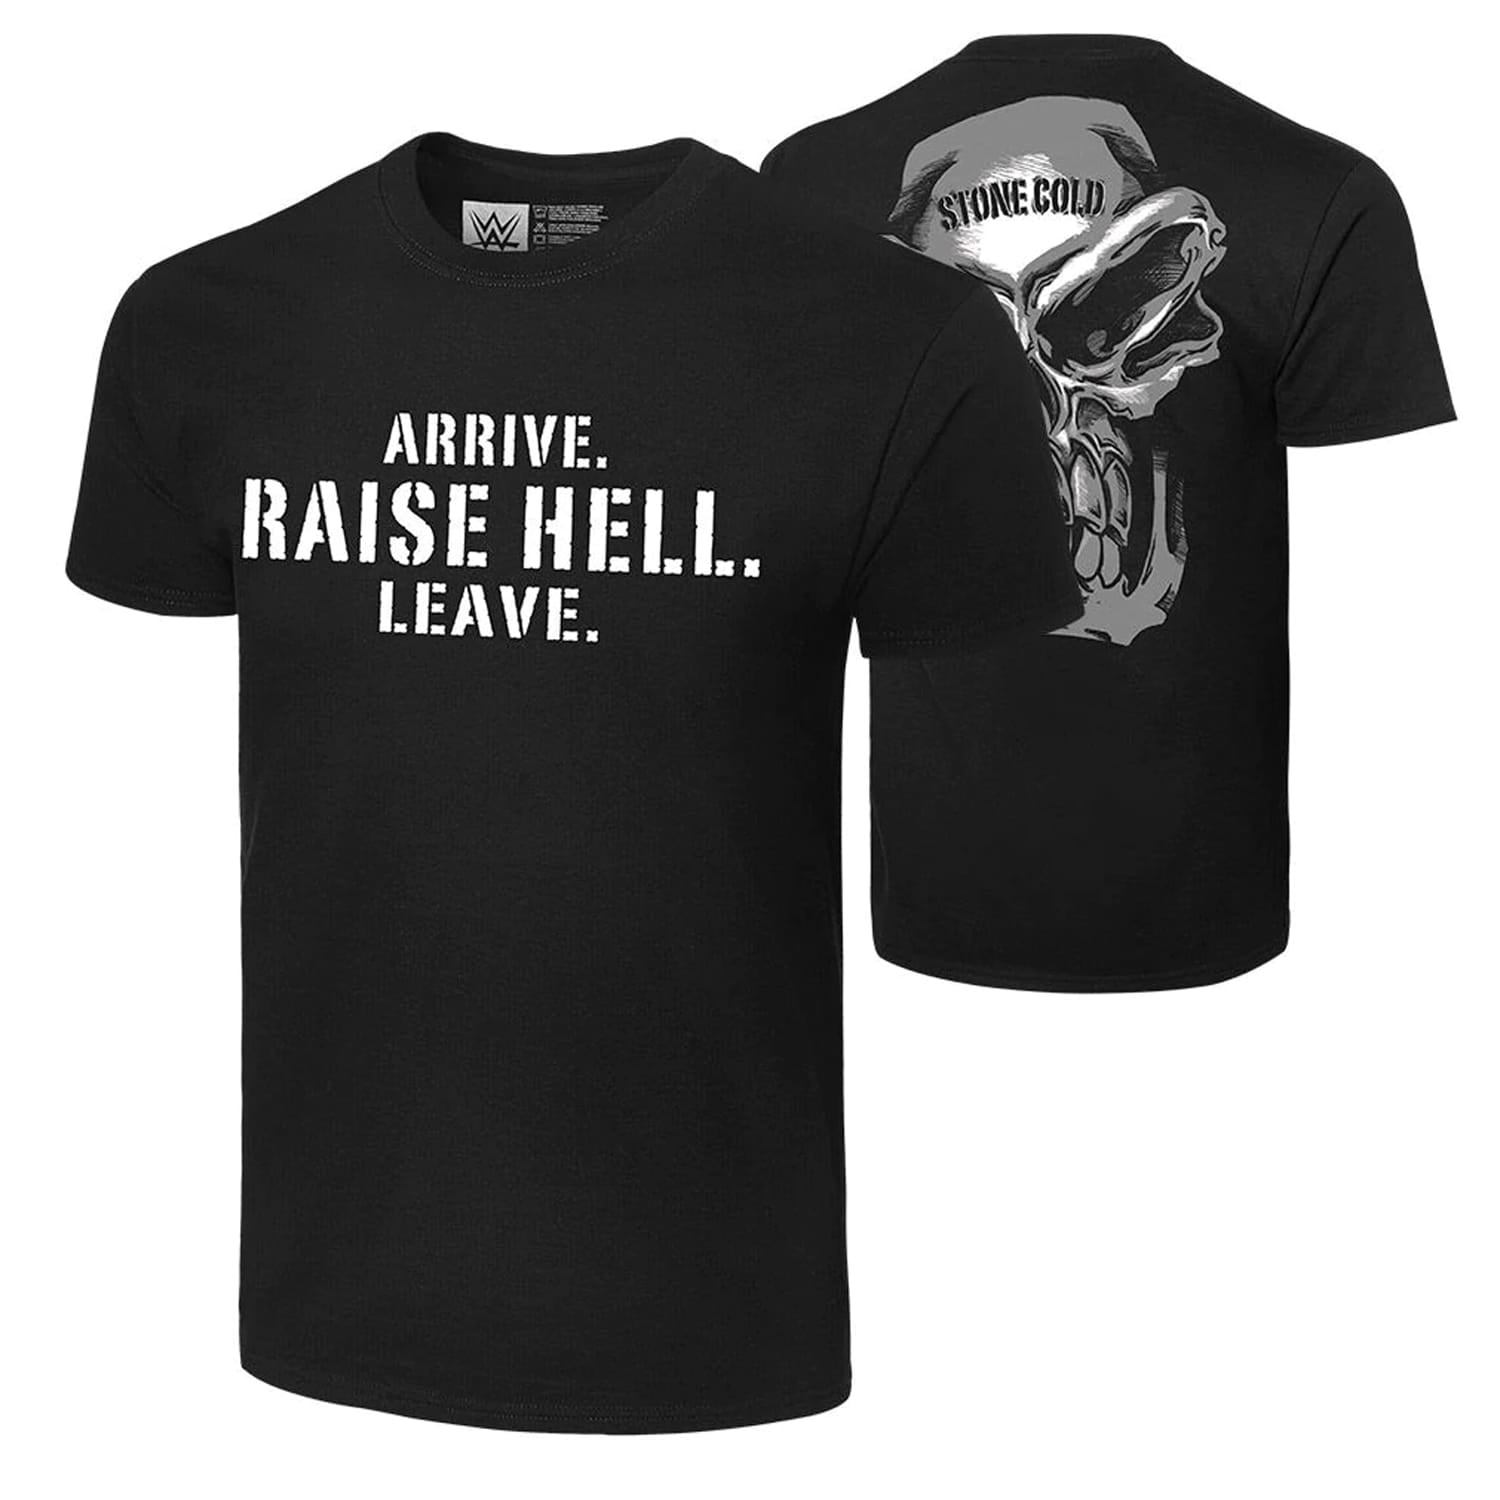 WWE STONE COLD STEVE AUSTIN "Arrive Raise Hell Leave Custom Shirt Mattel figures 